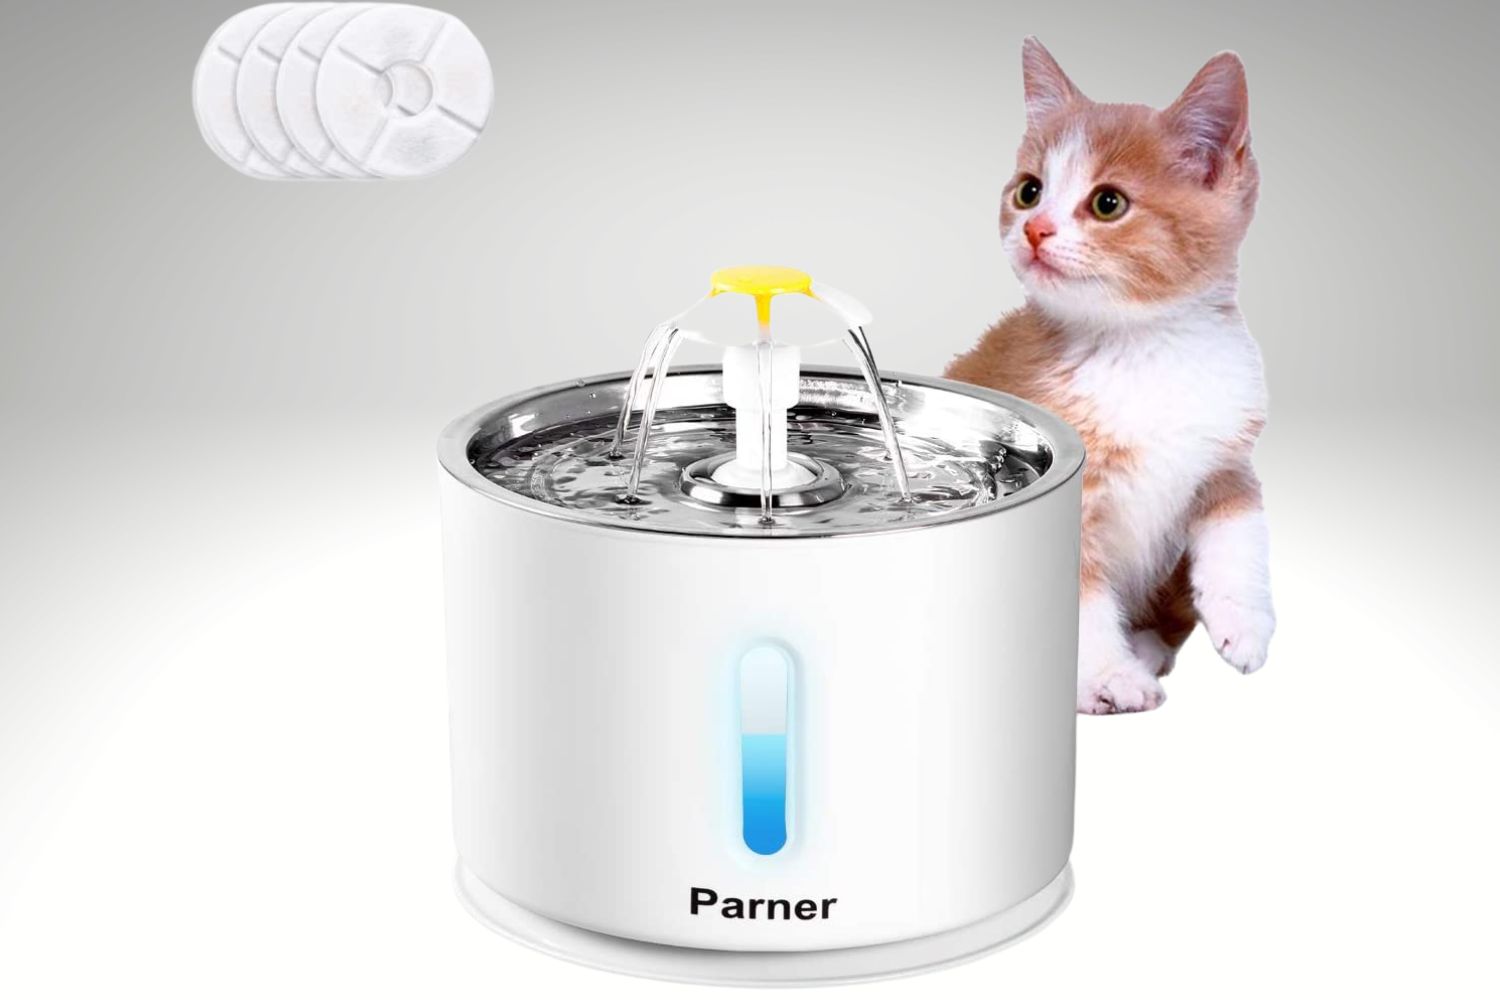 Parner Pet Water Fountain, viral pet accessories